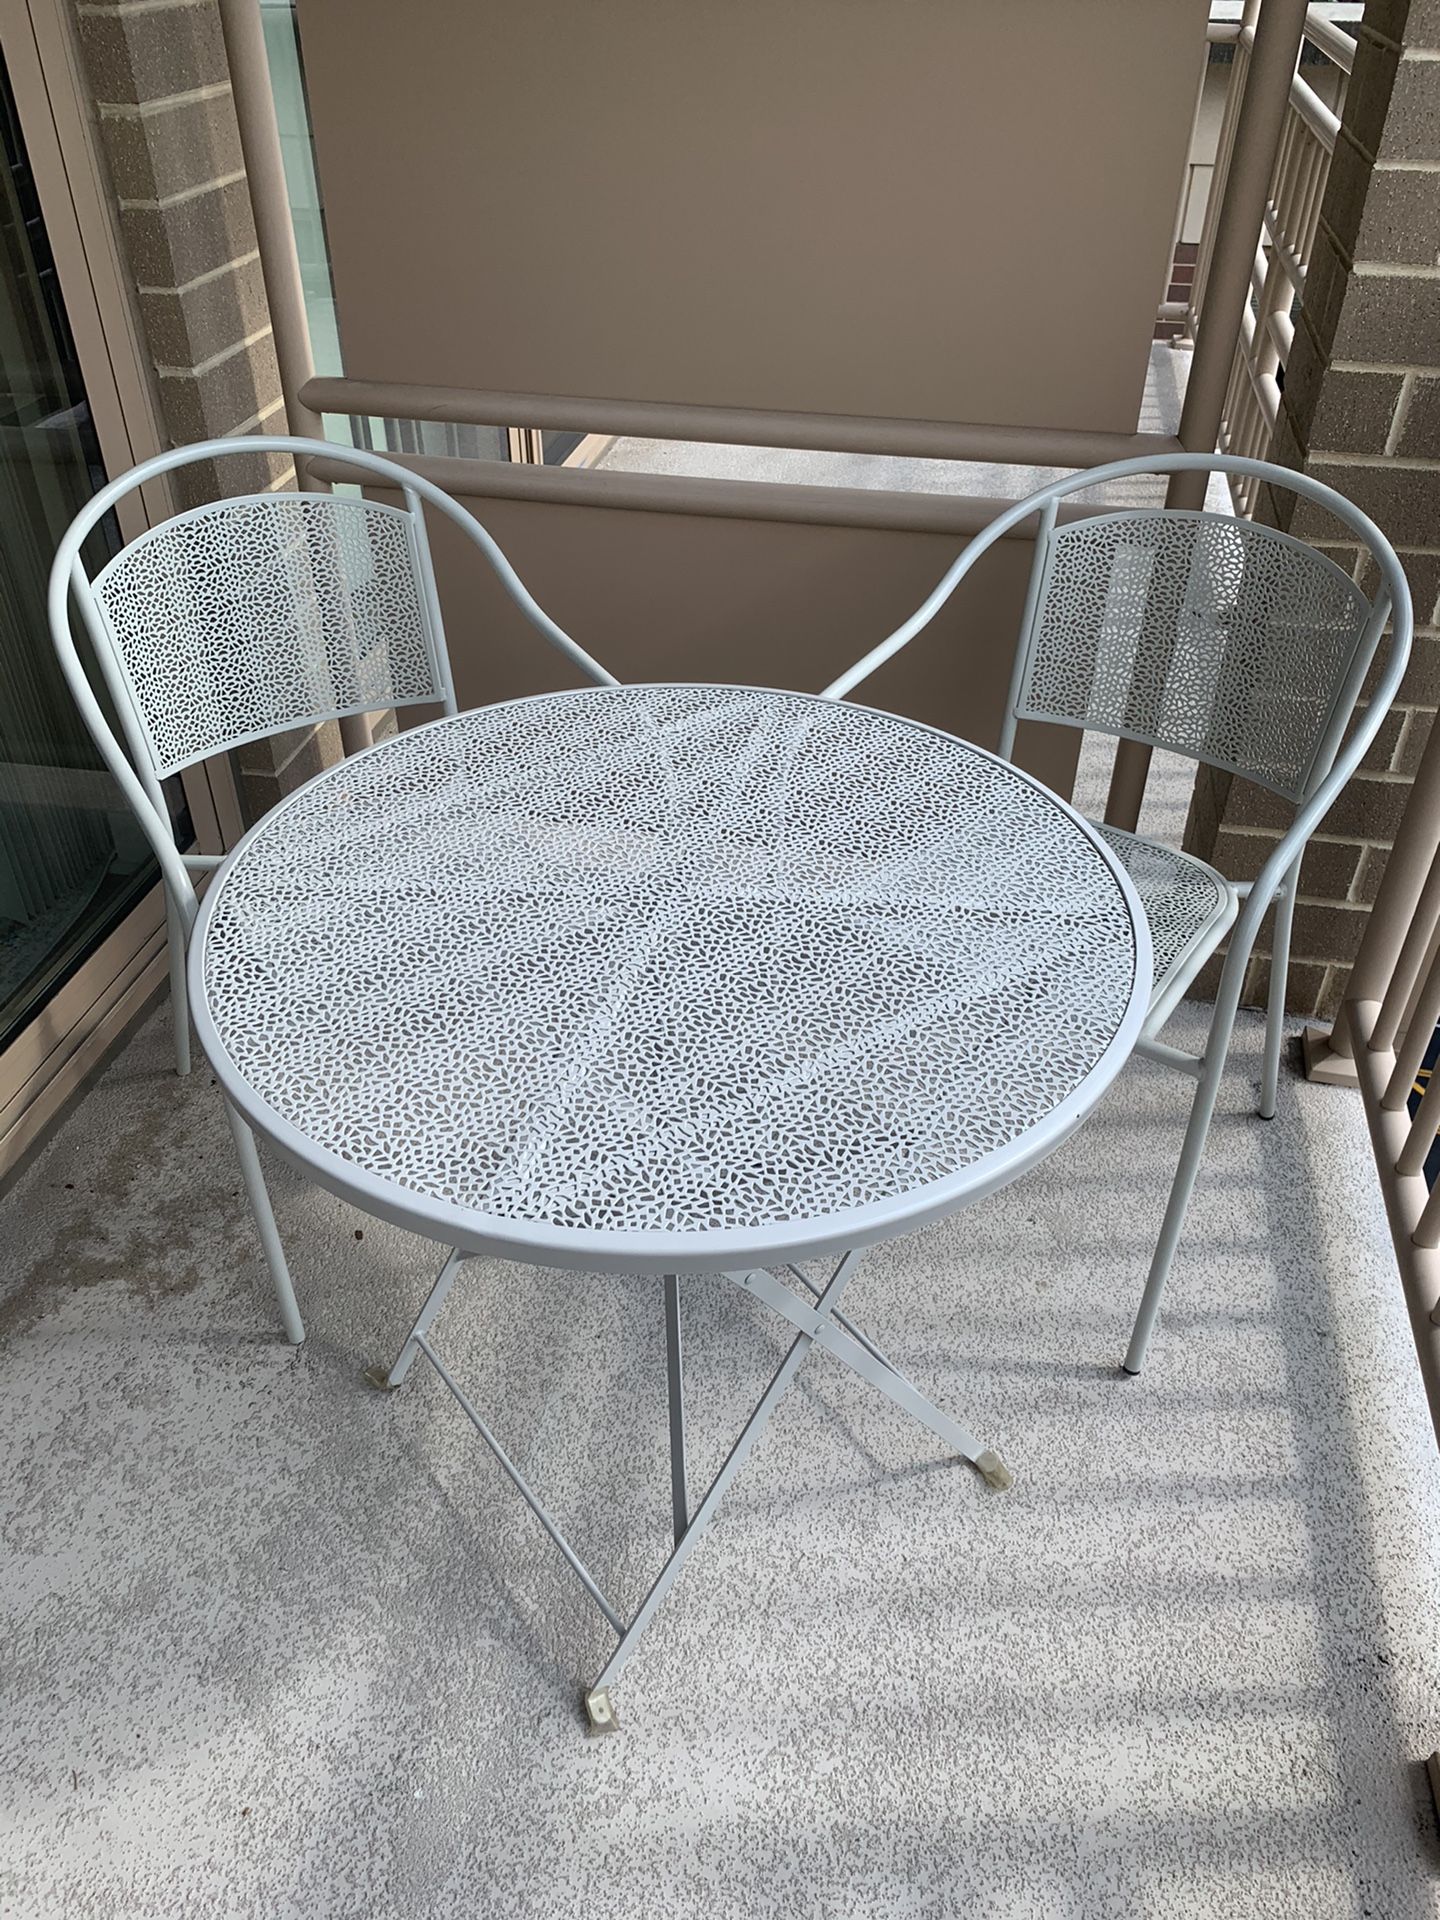 3-piece Metal Table & Chair Set (Light Gray)